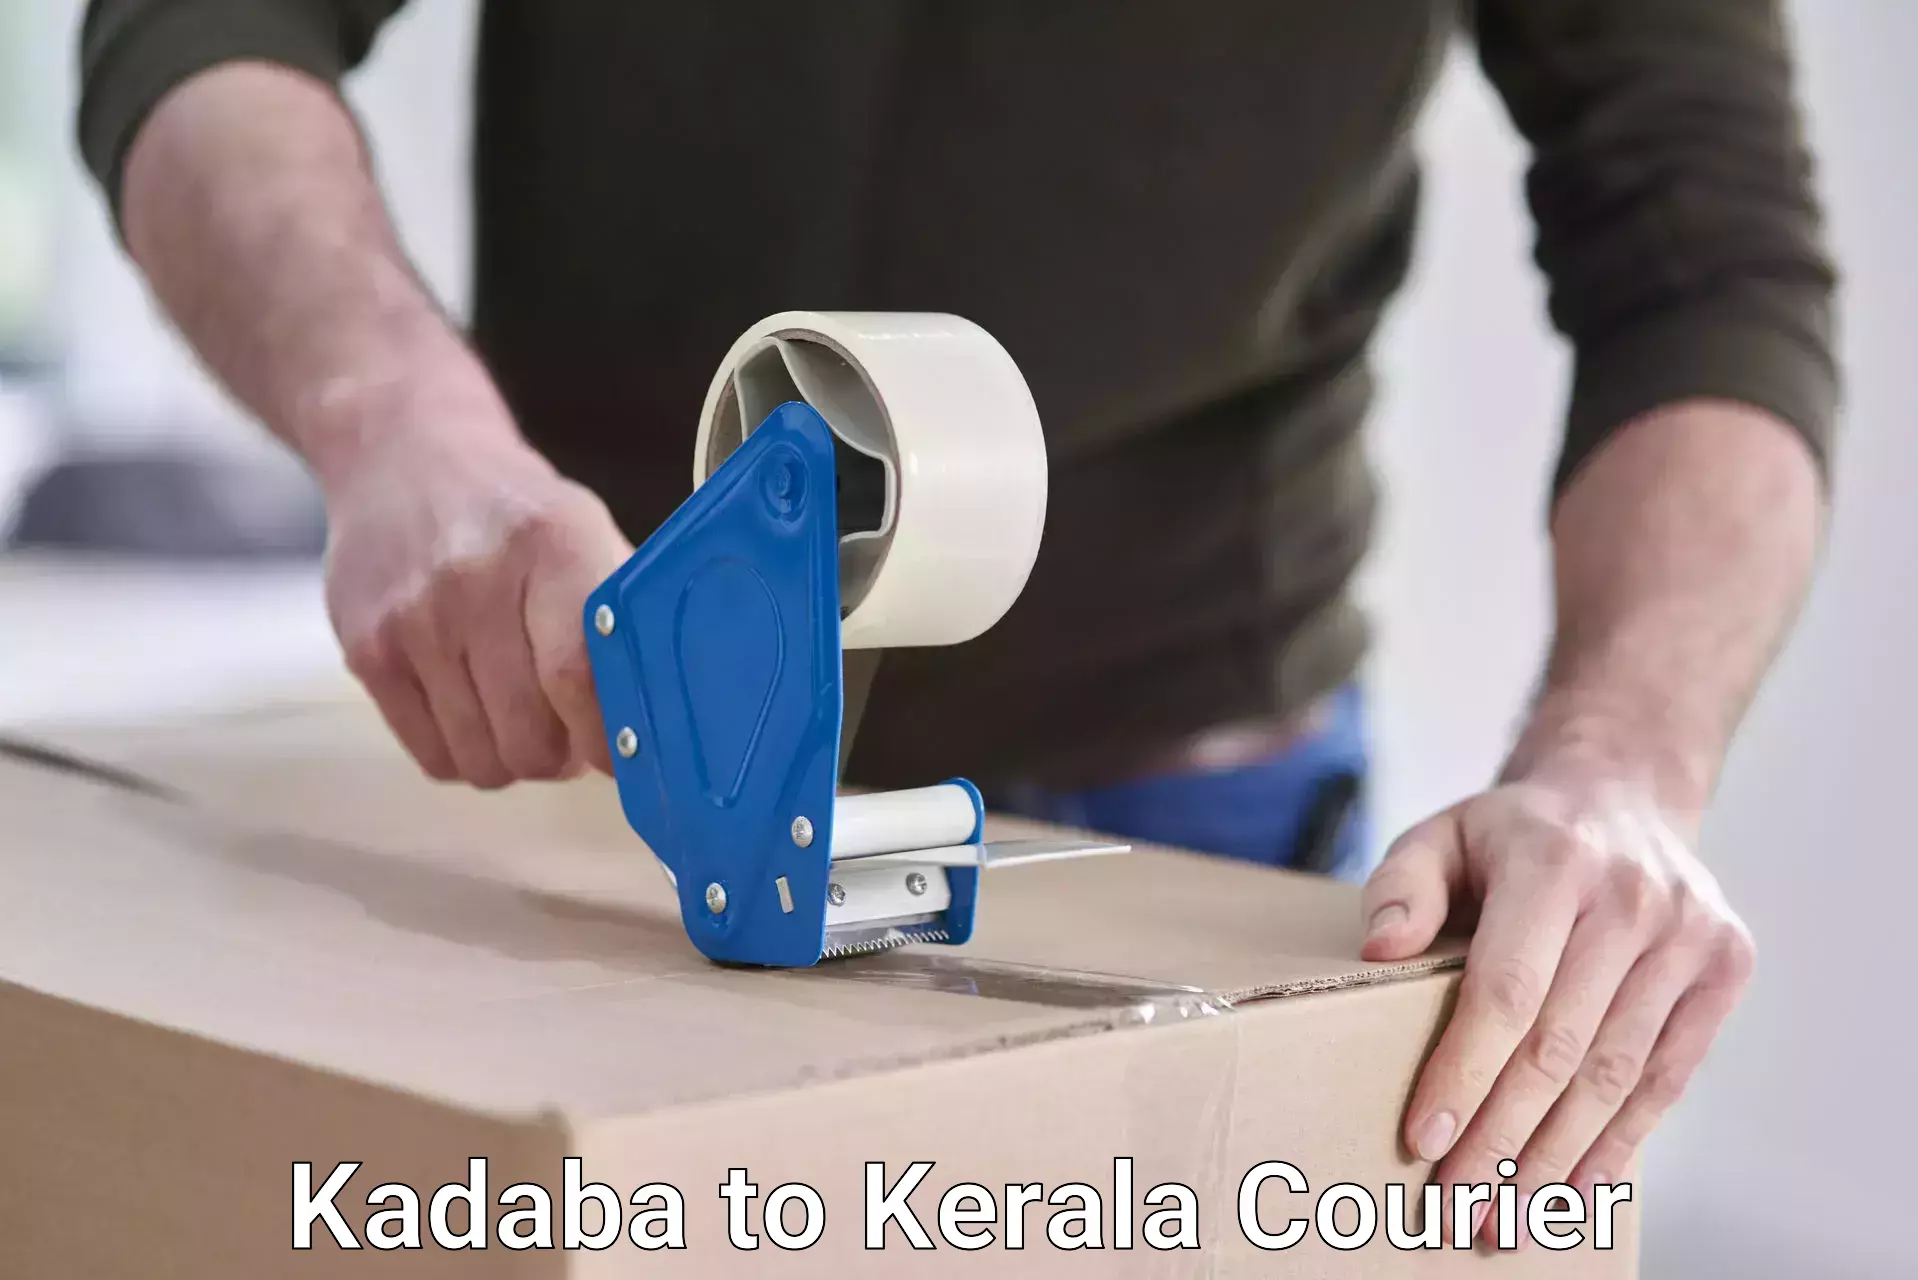 Enhanced tracking features in Kadaba to Kuthumkal